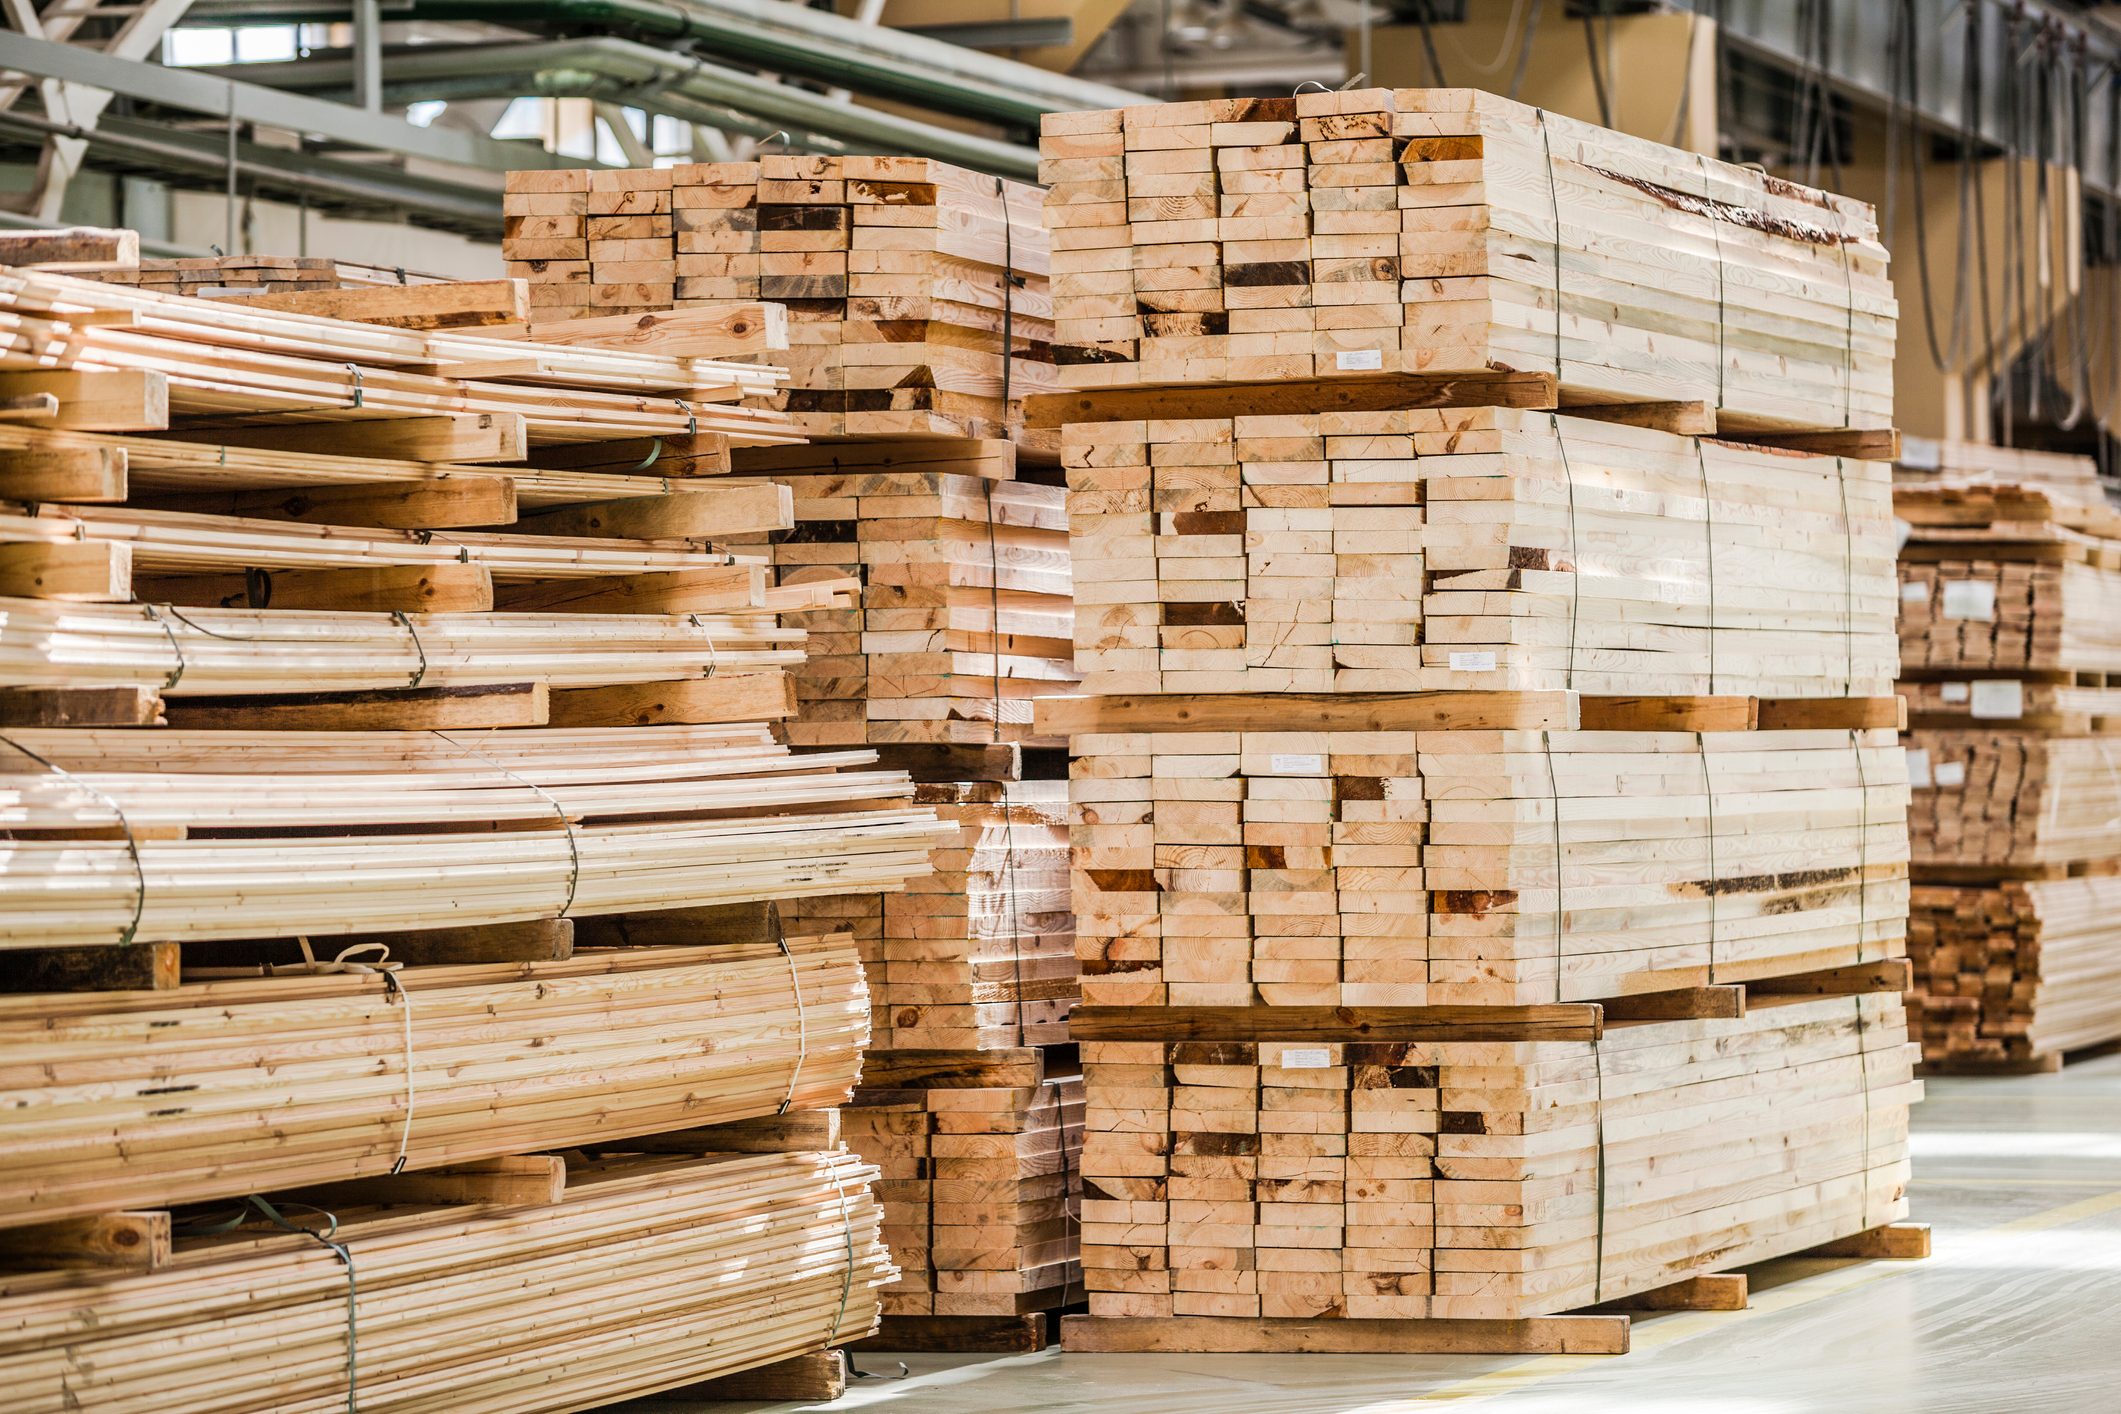 stacks of wood in a lumber yard